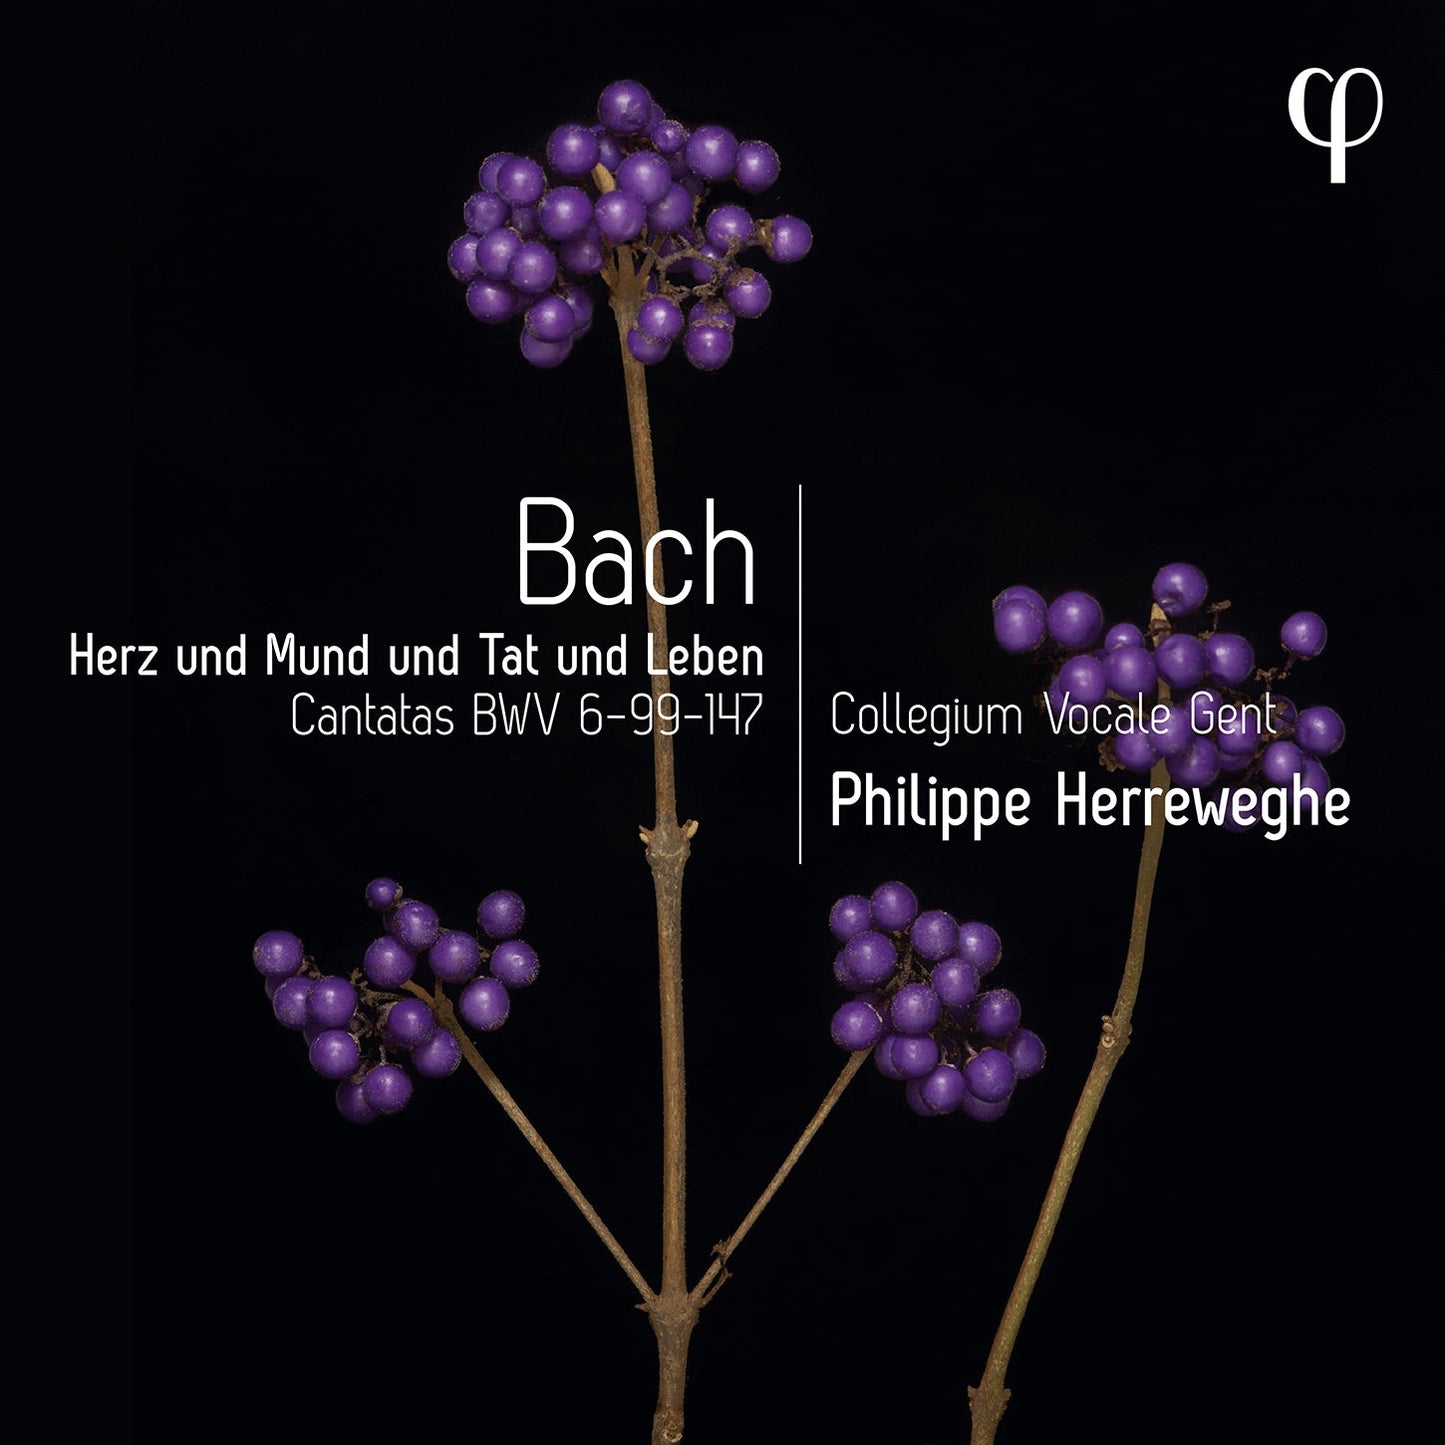 J.S. Bach: Cantatas, BMV 6-99-147 / Collegium Vocale Gent